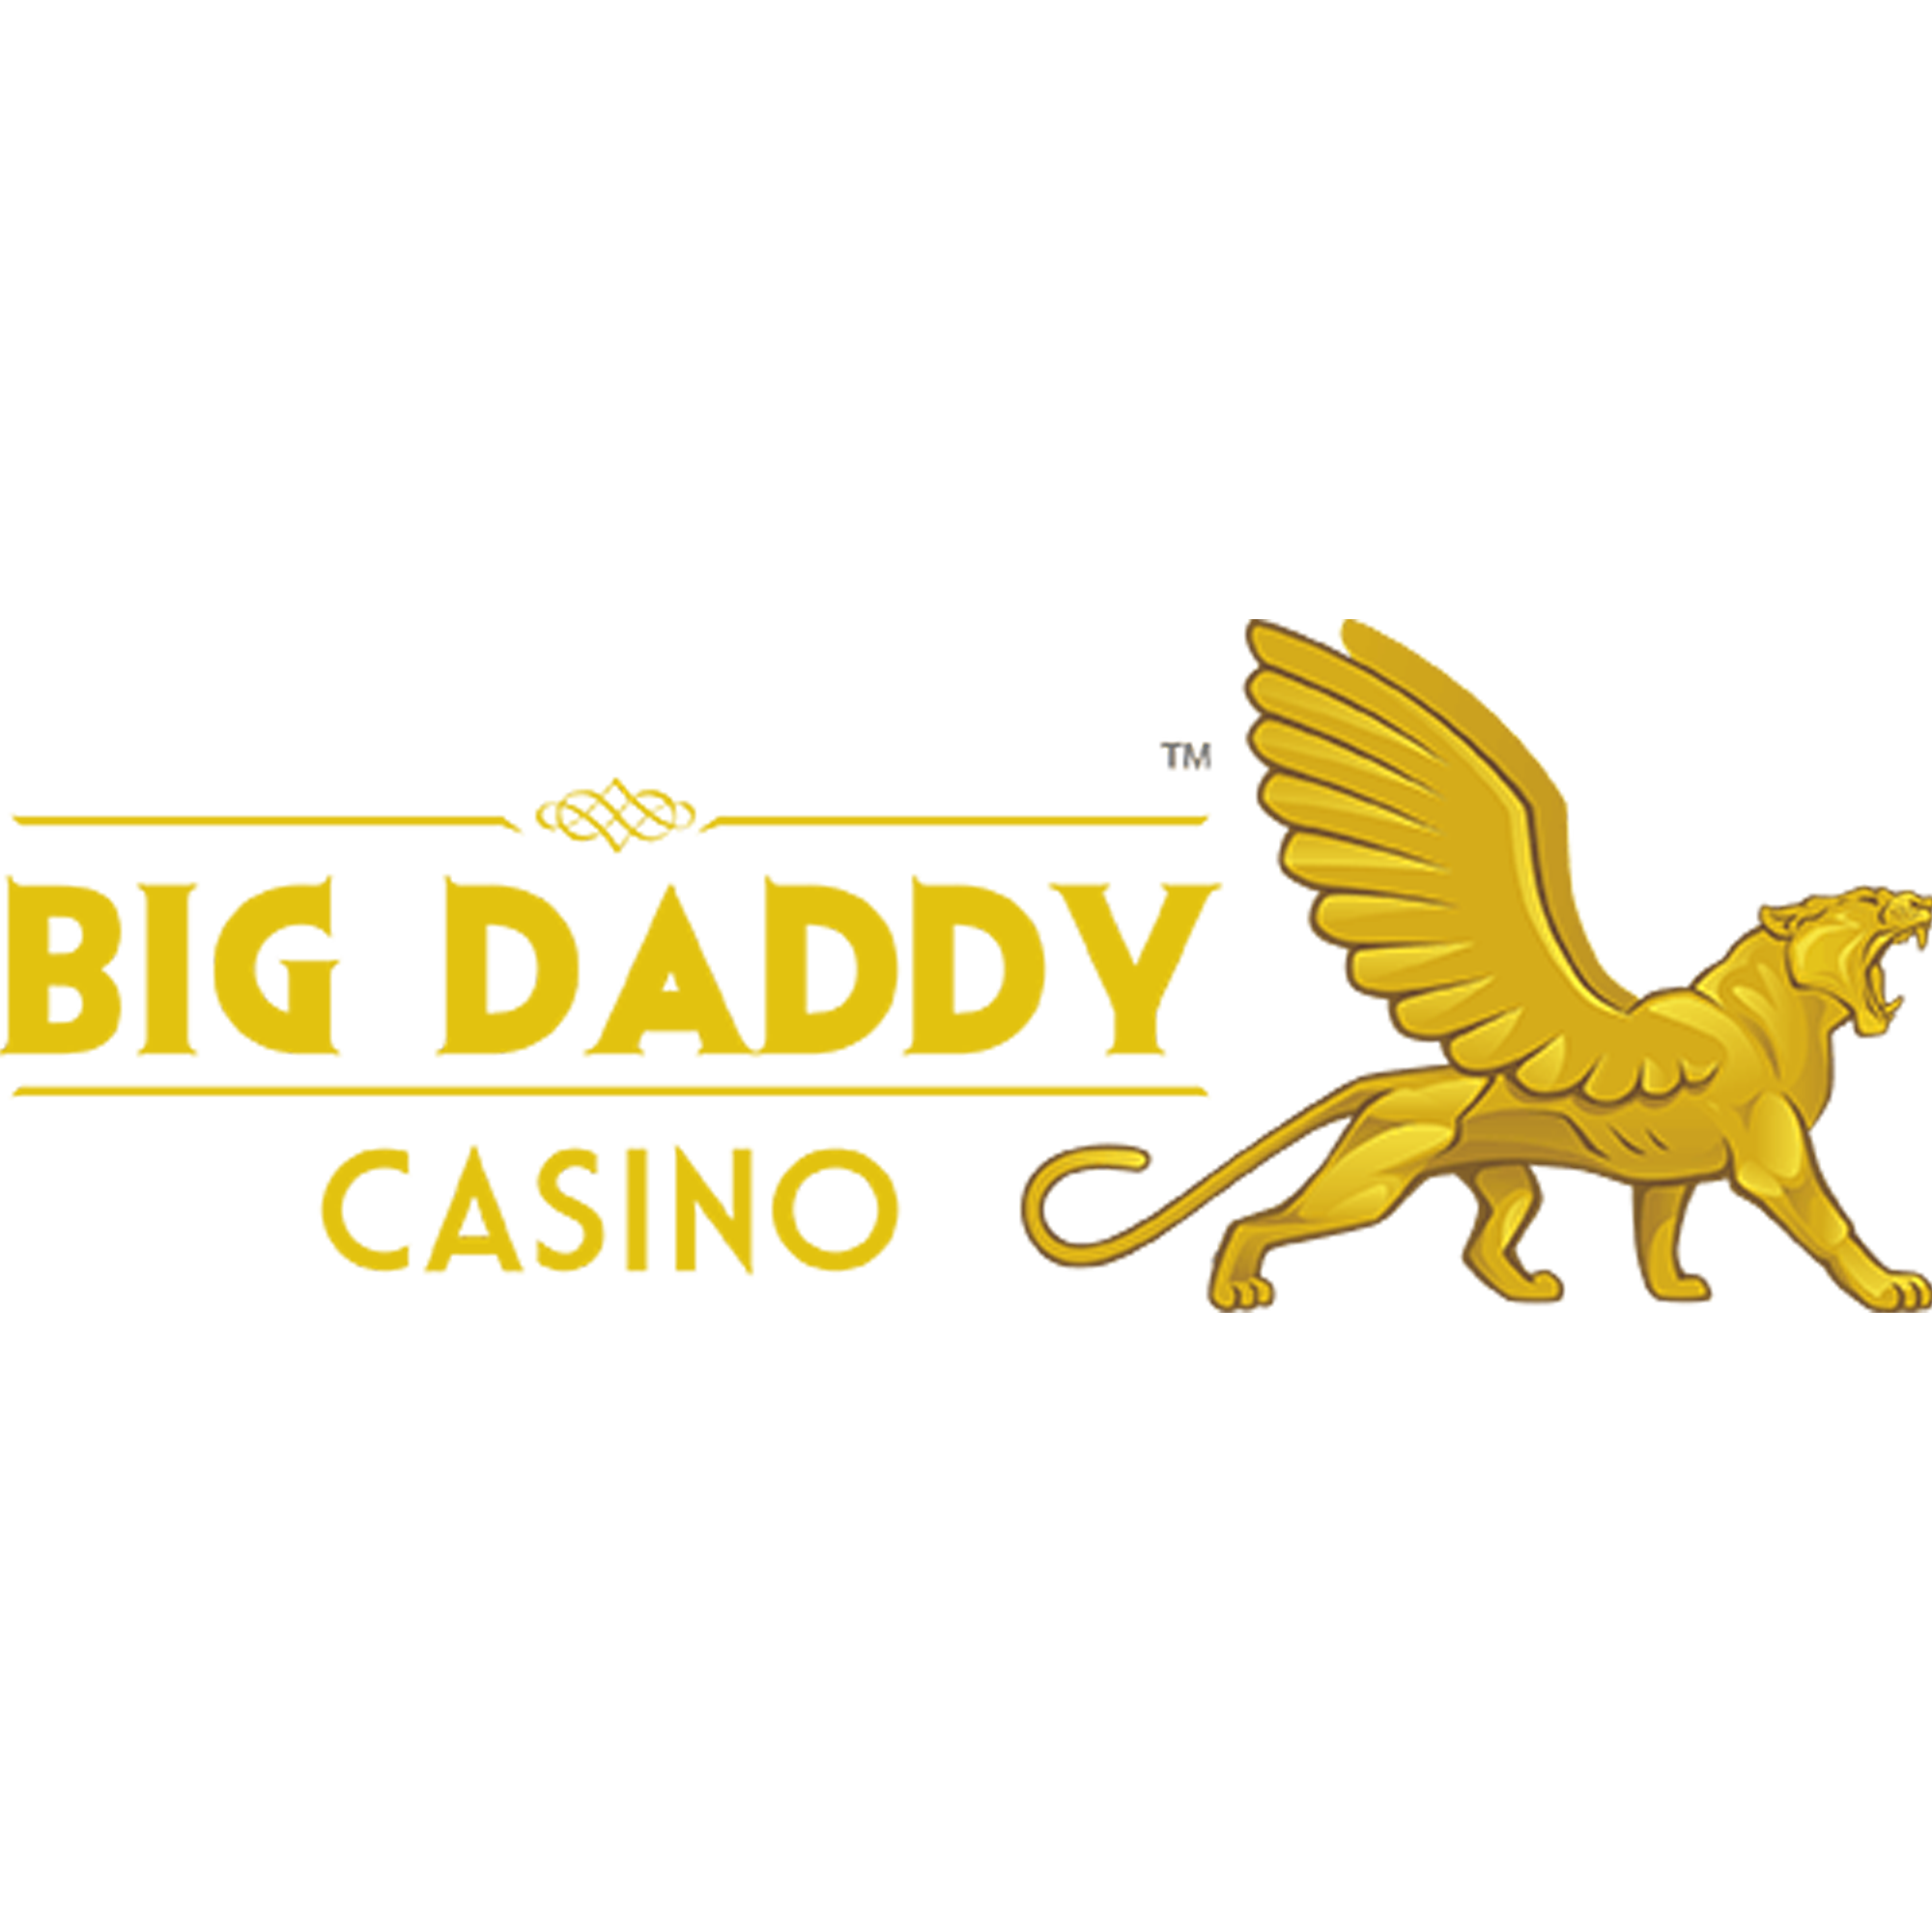 Big Daddy Casino